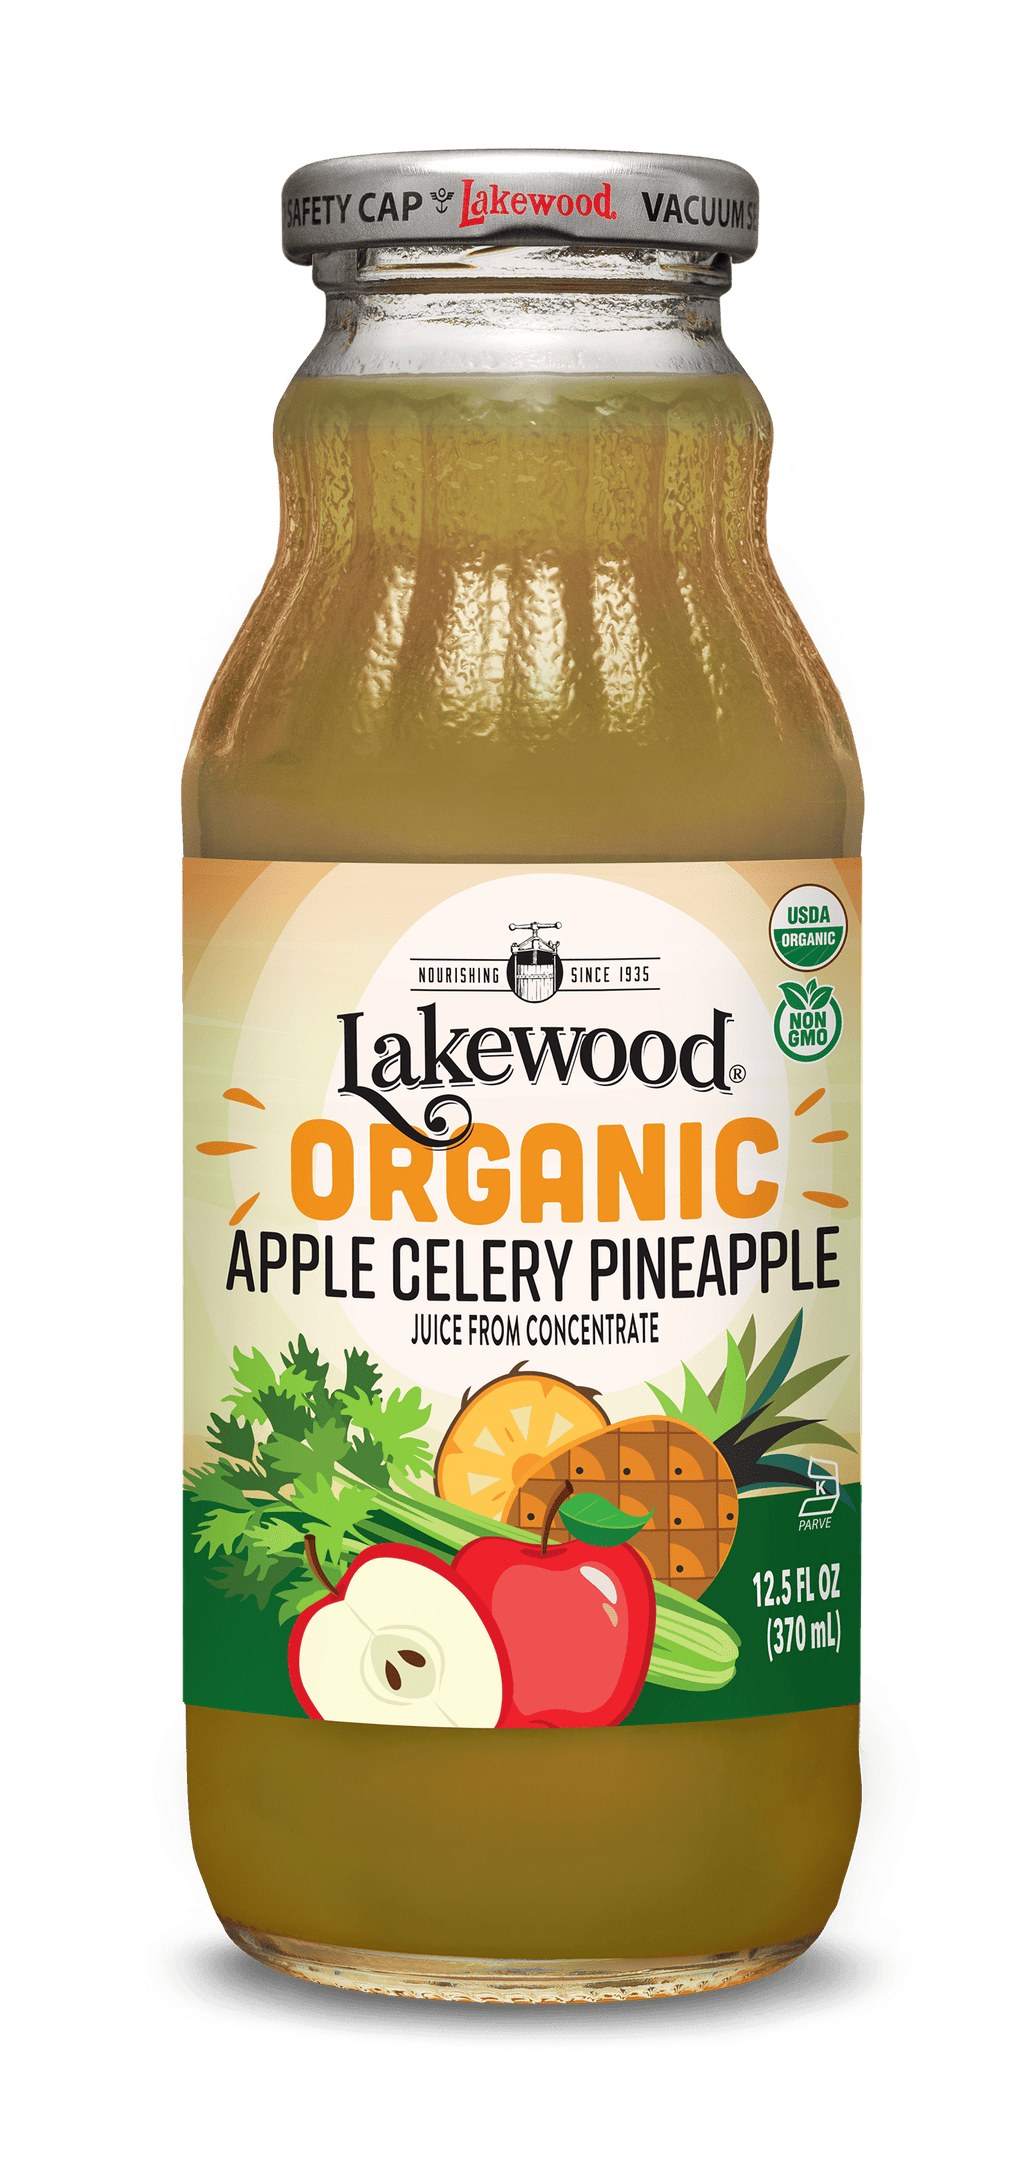 lakewood-organic-apple-celery-pineapple-juice-fresh-pressed